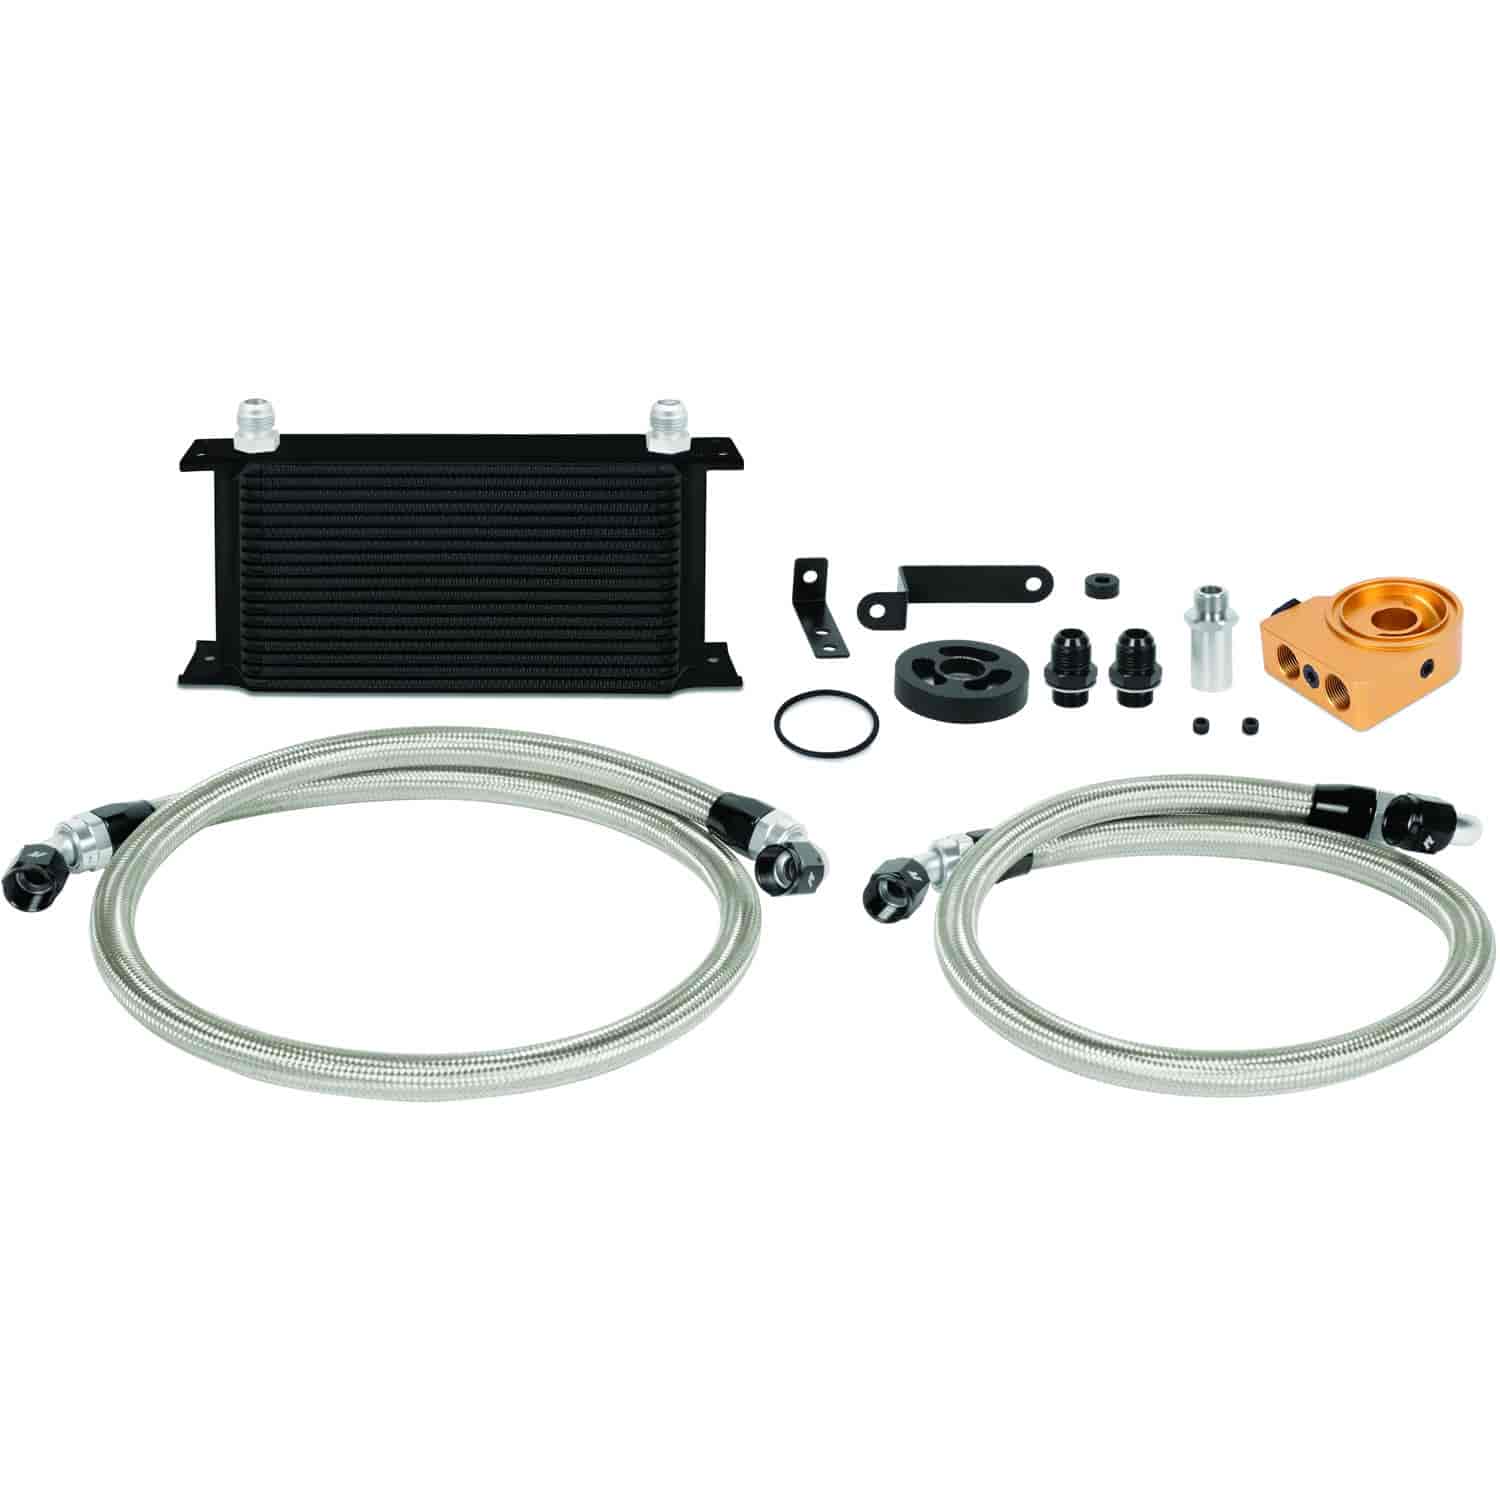 Subaru WRX Thermostatic Oil Cooler Kit Black - MFG Part No. MMOC-WRX-08TBK